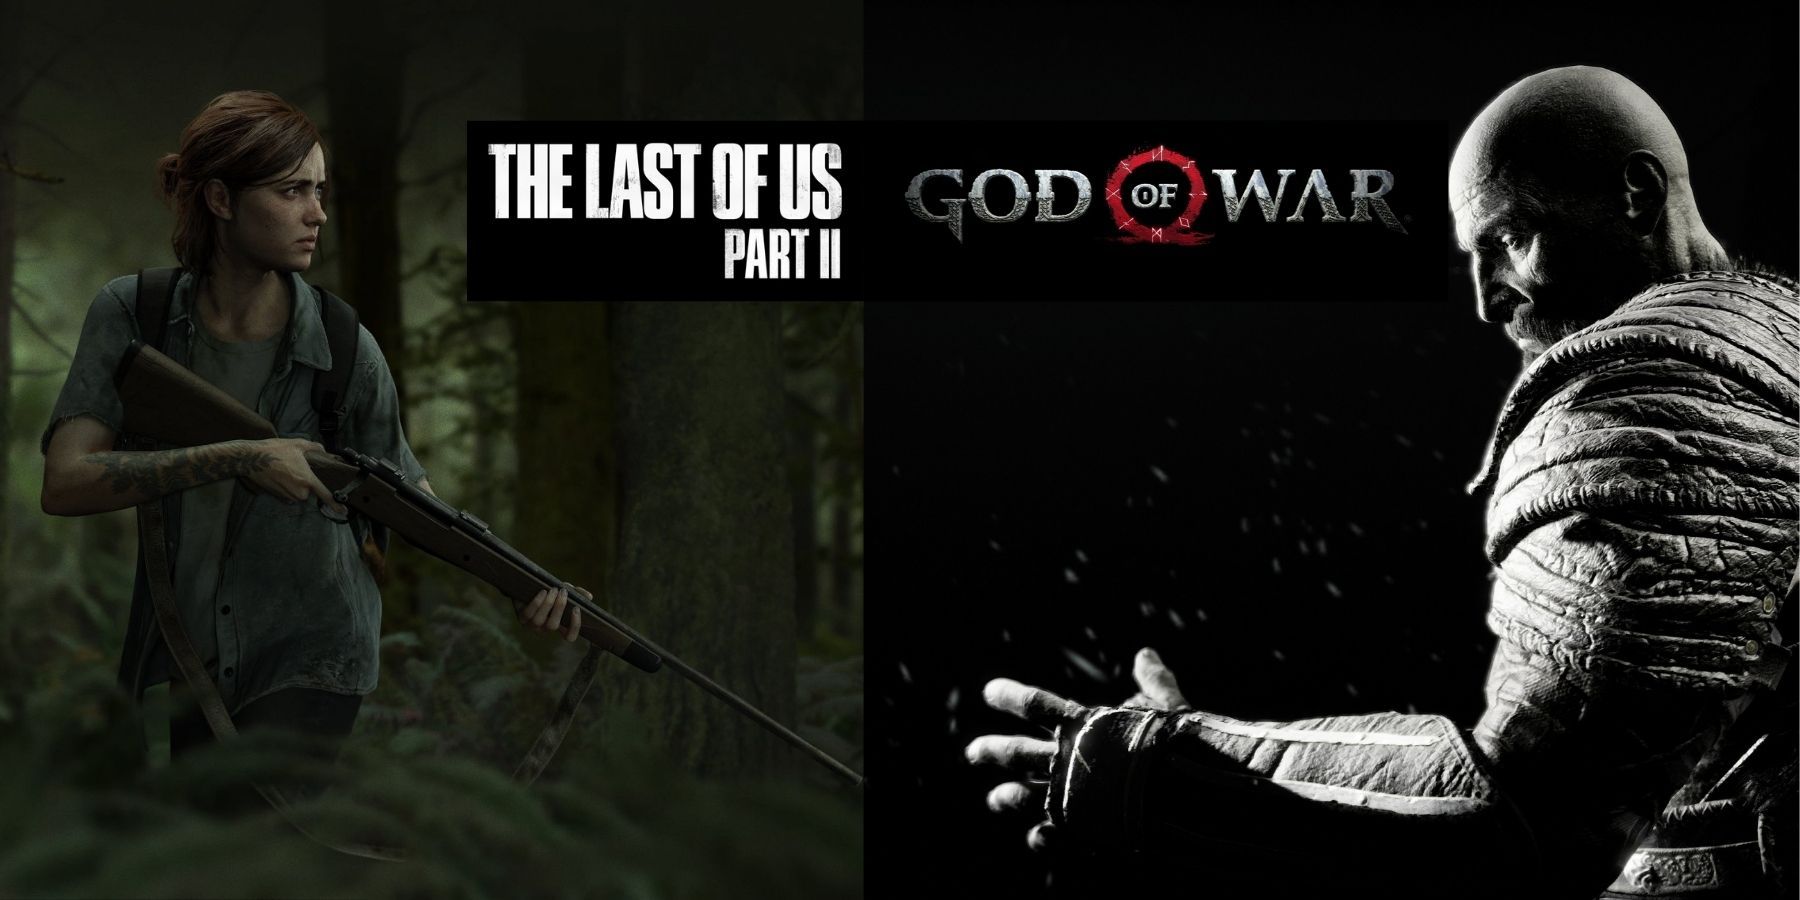 The Last of Us Part II
God of War